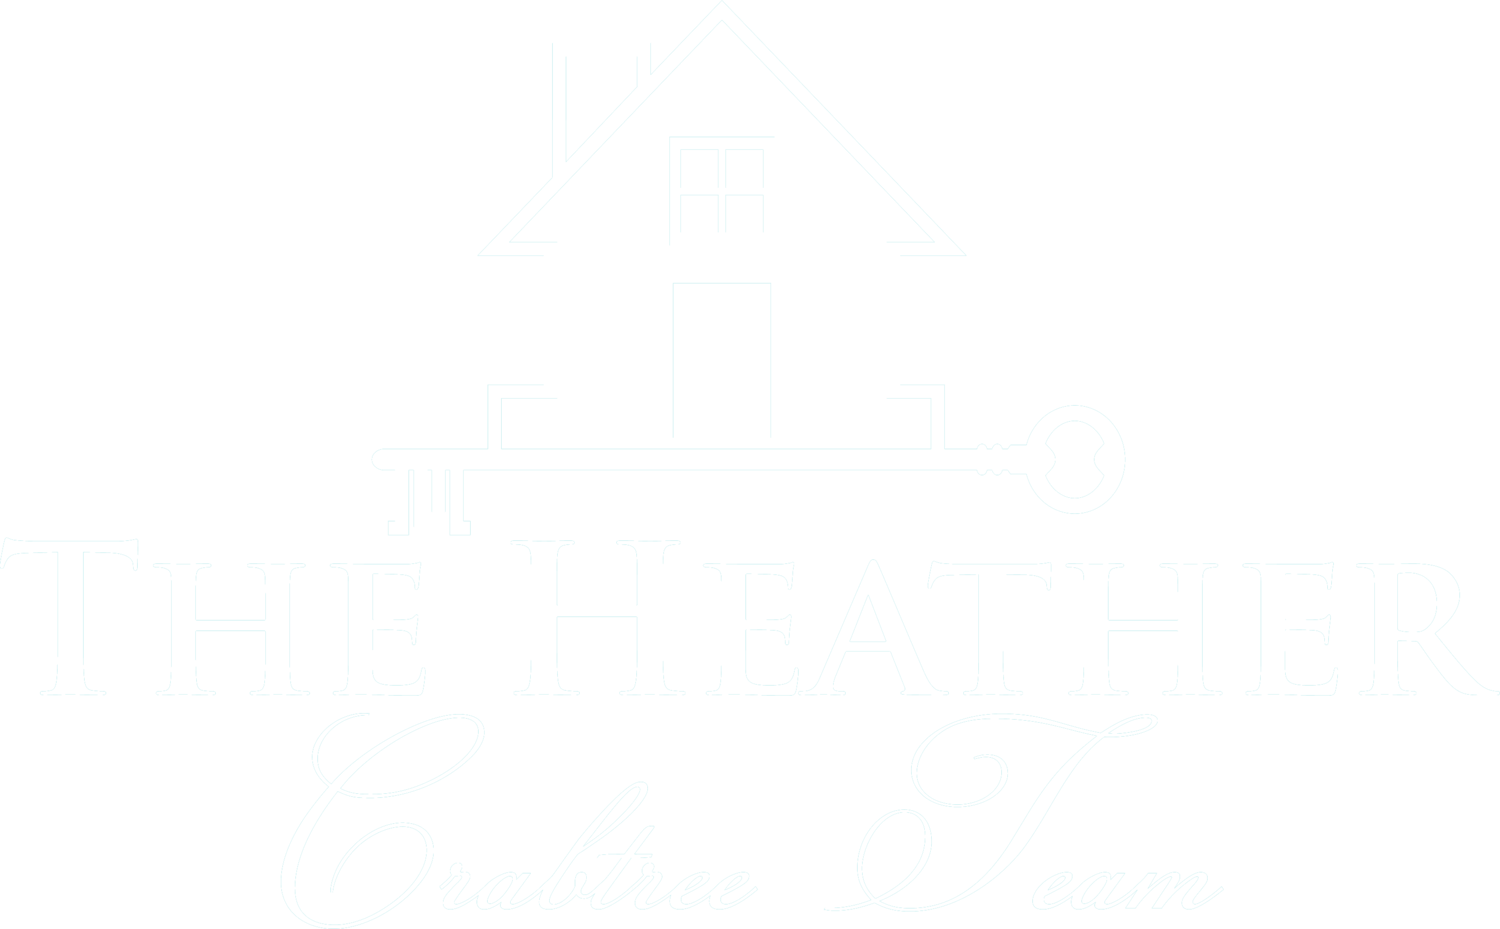 The Heather Crabtree Team